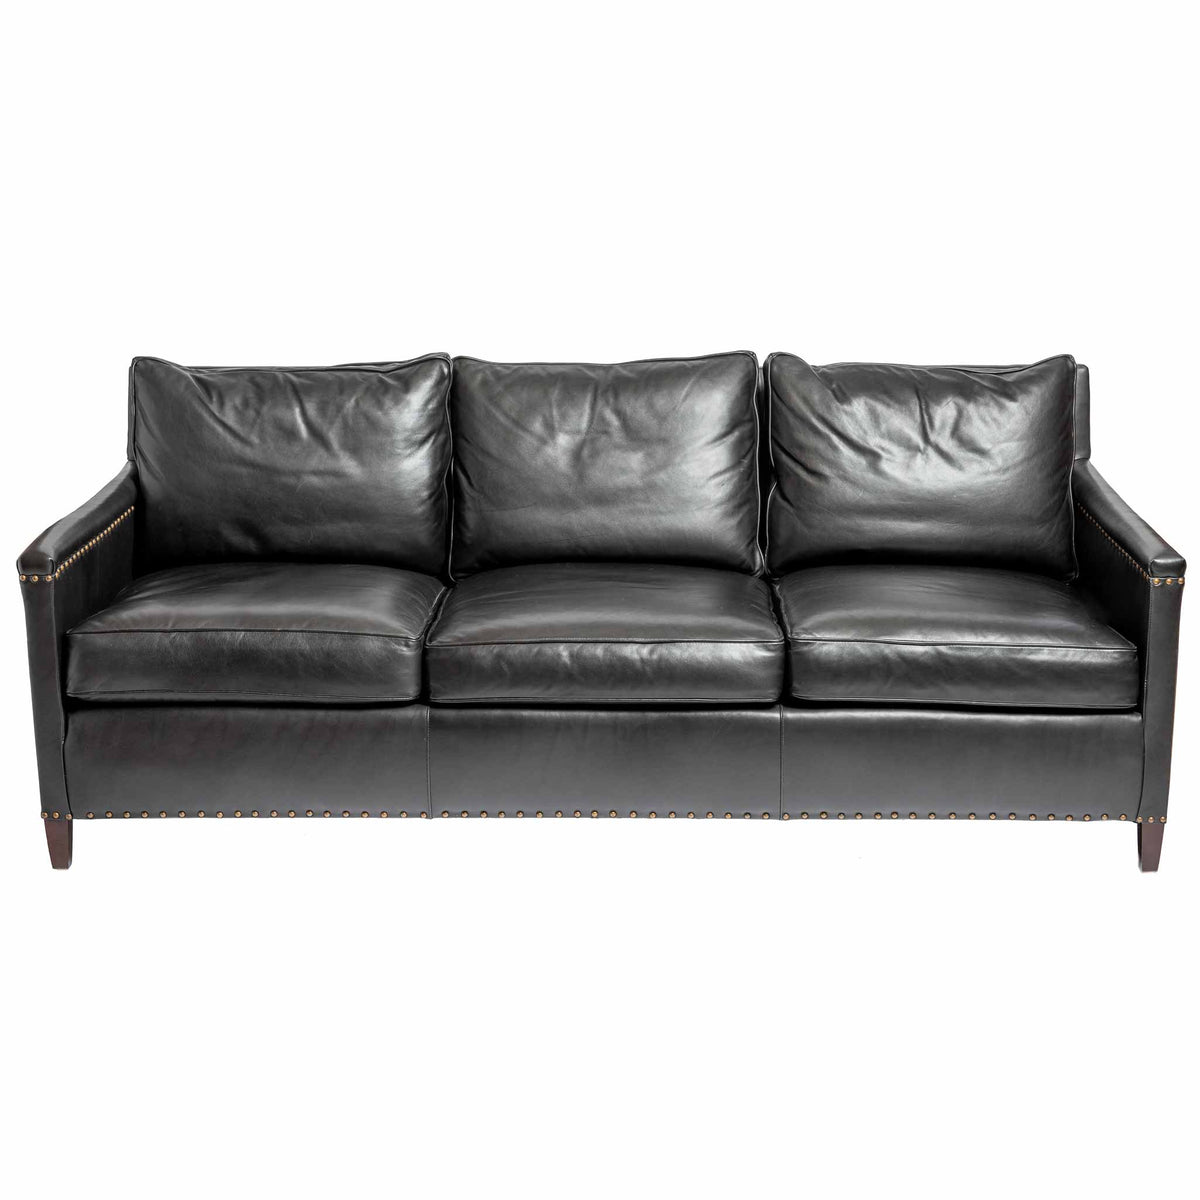 Black leather sofa S1 F35